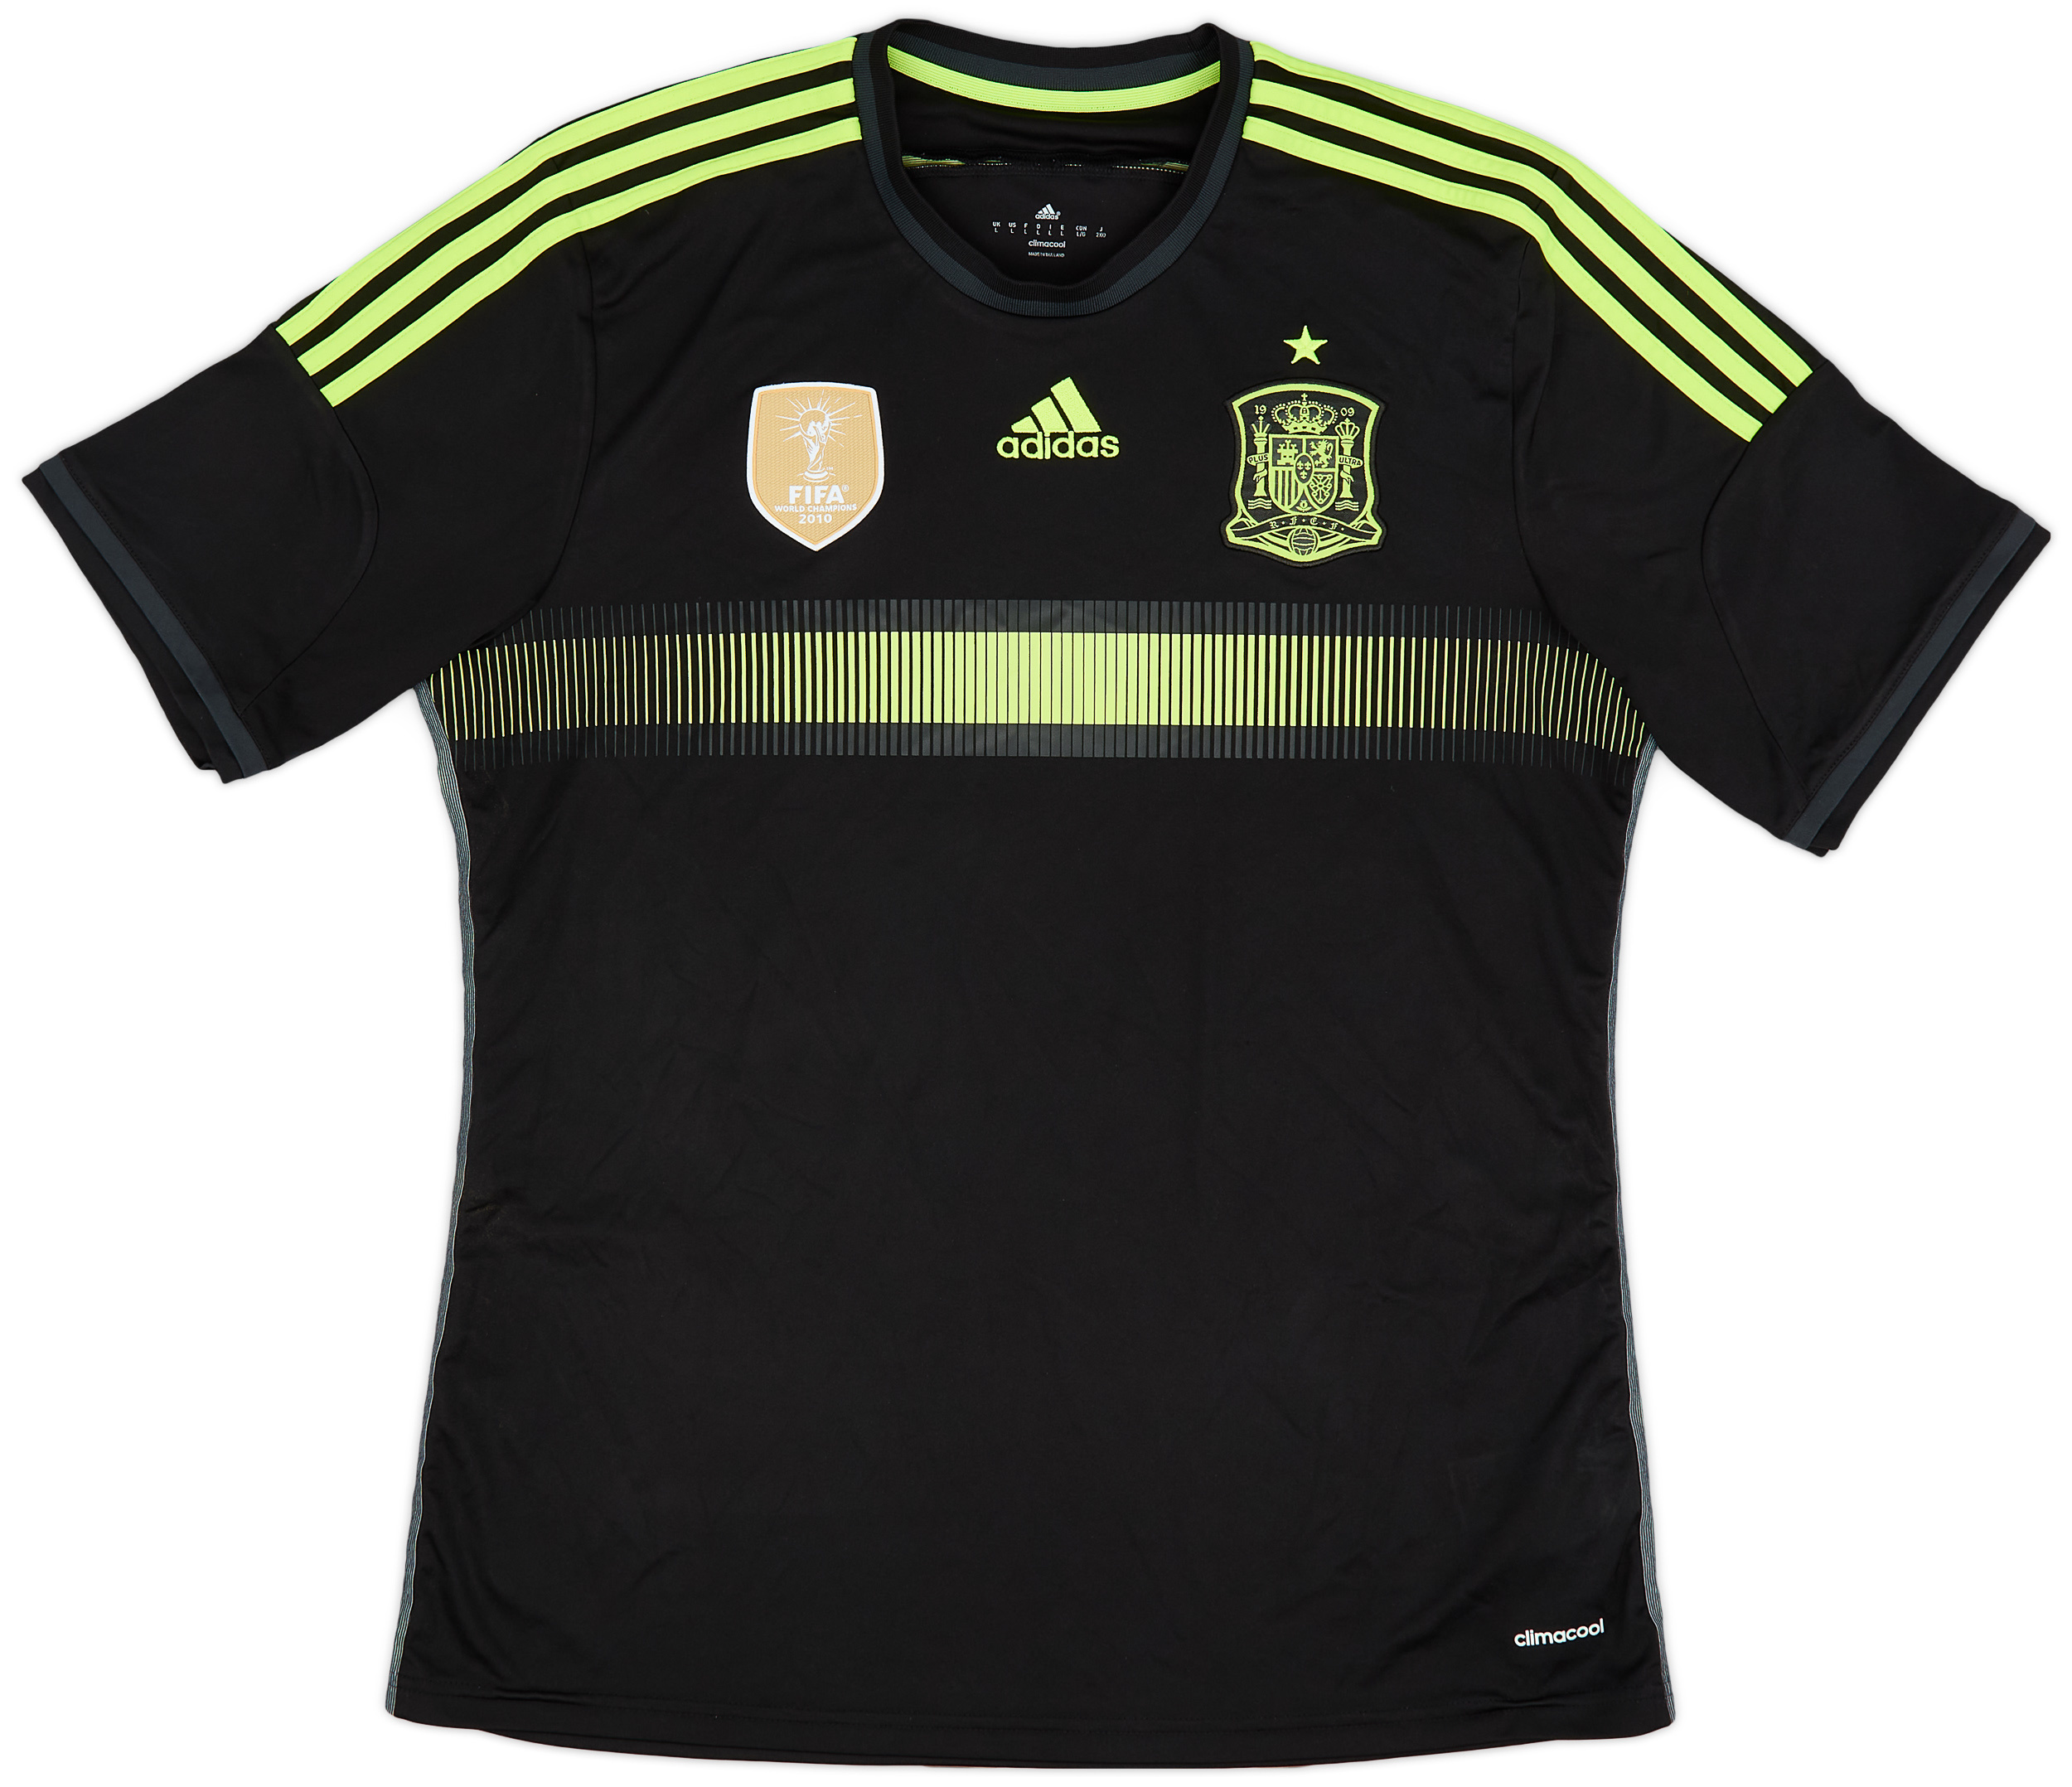 Retro Spain Shirt